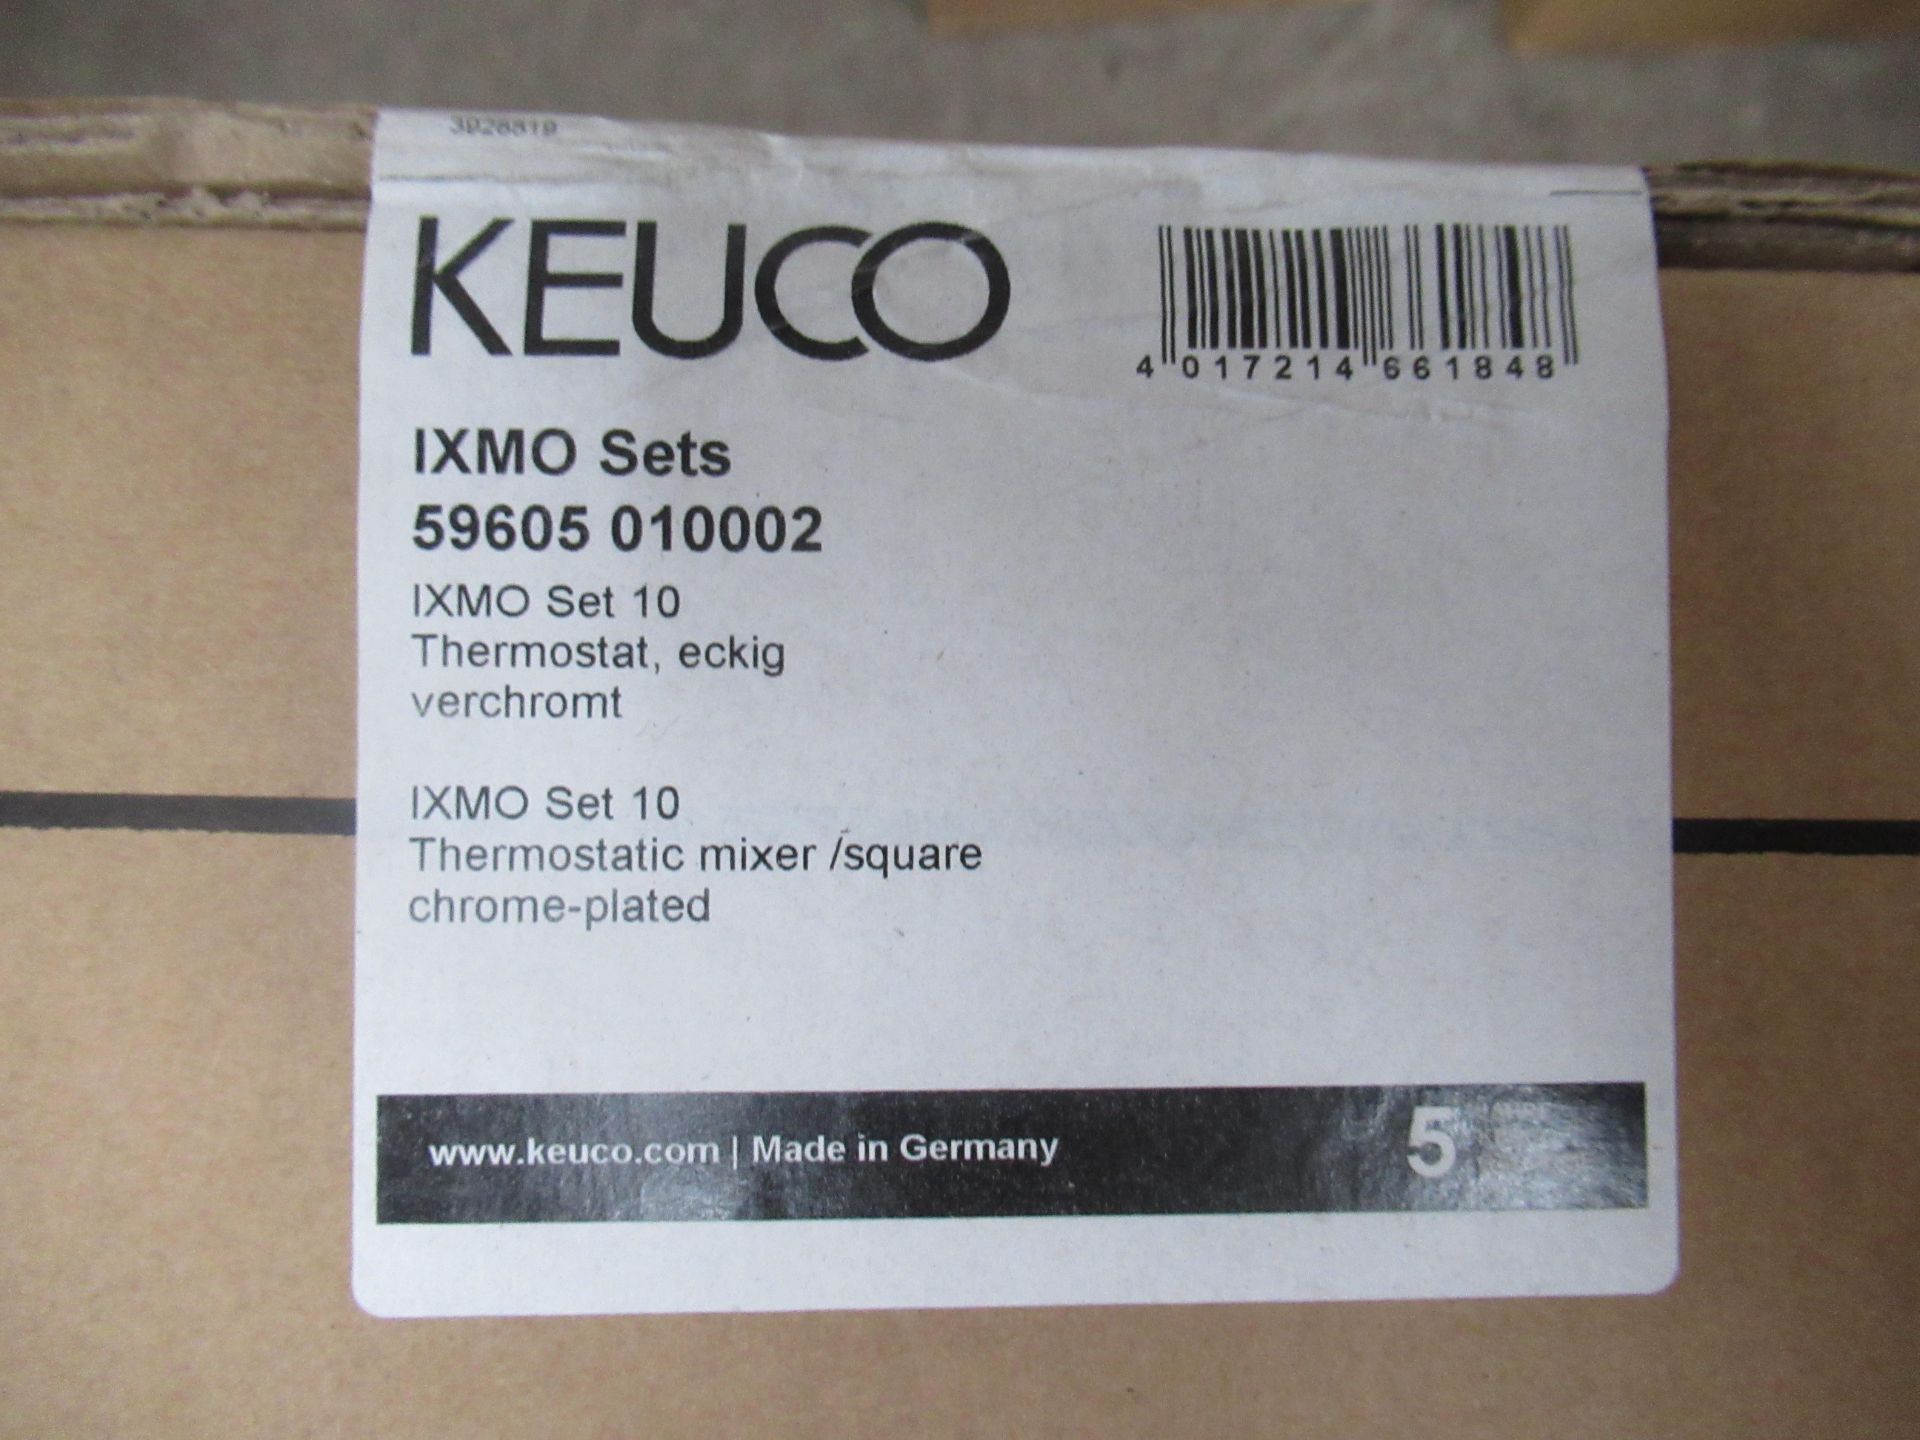 Keuco IXMO Shower Set 10. Thermostatic Mixer 2Ways with Square Rosettes (Chrome Plated) - Image 2 of 4